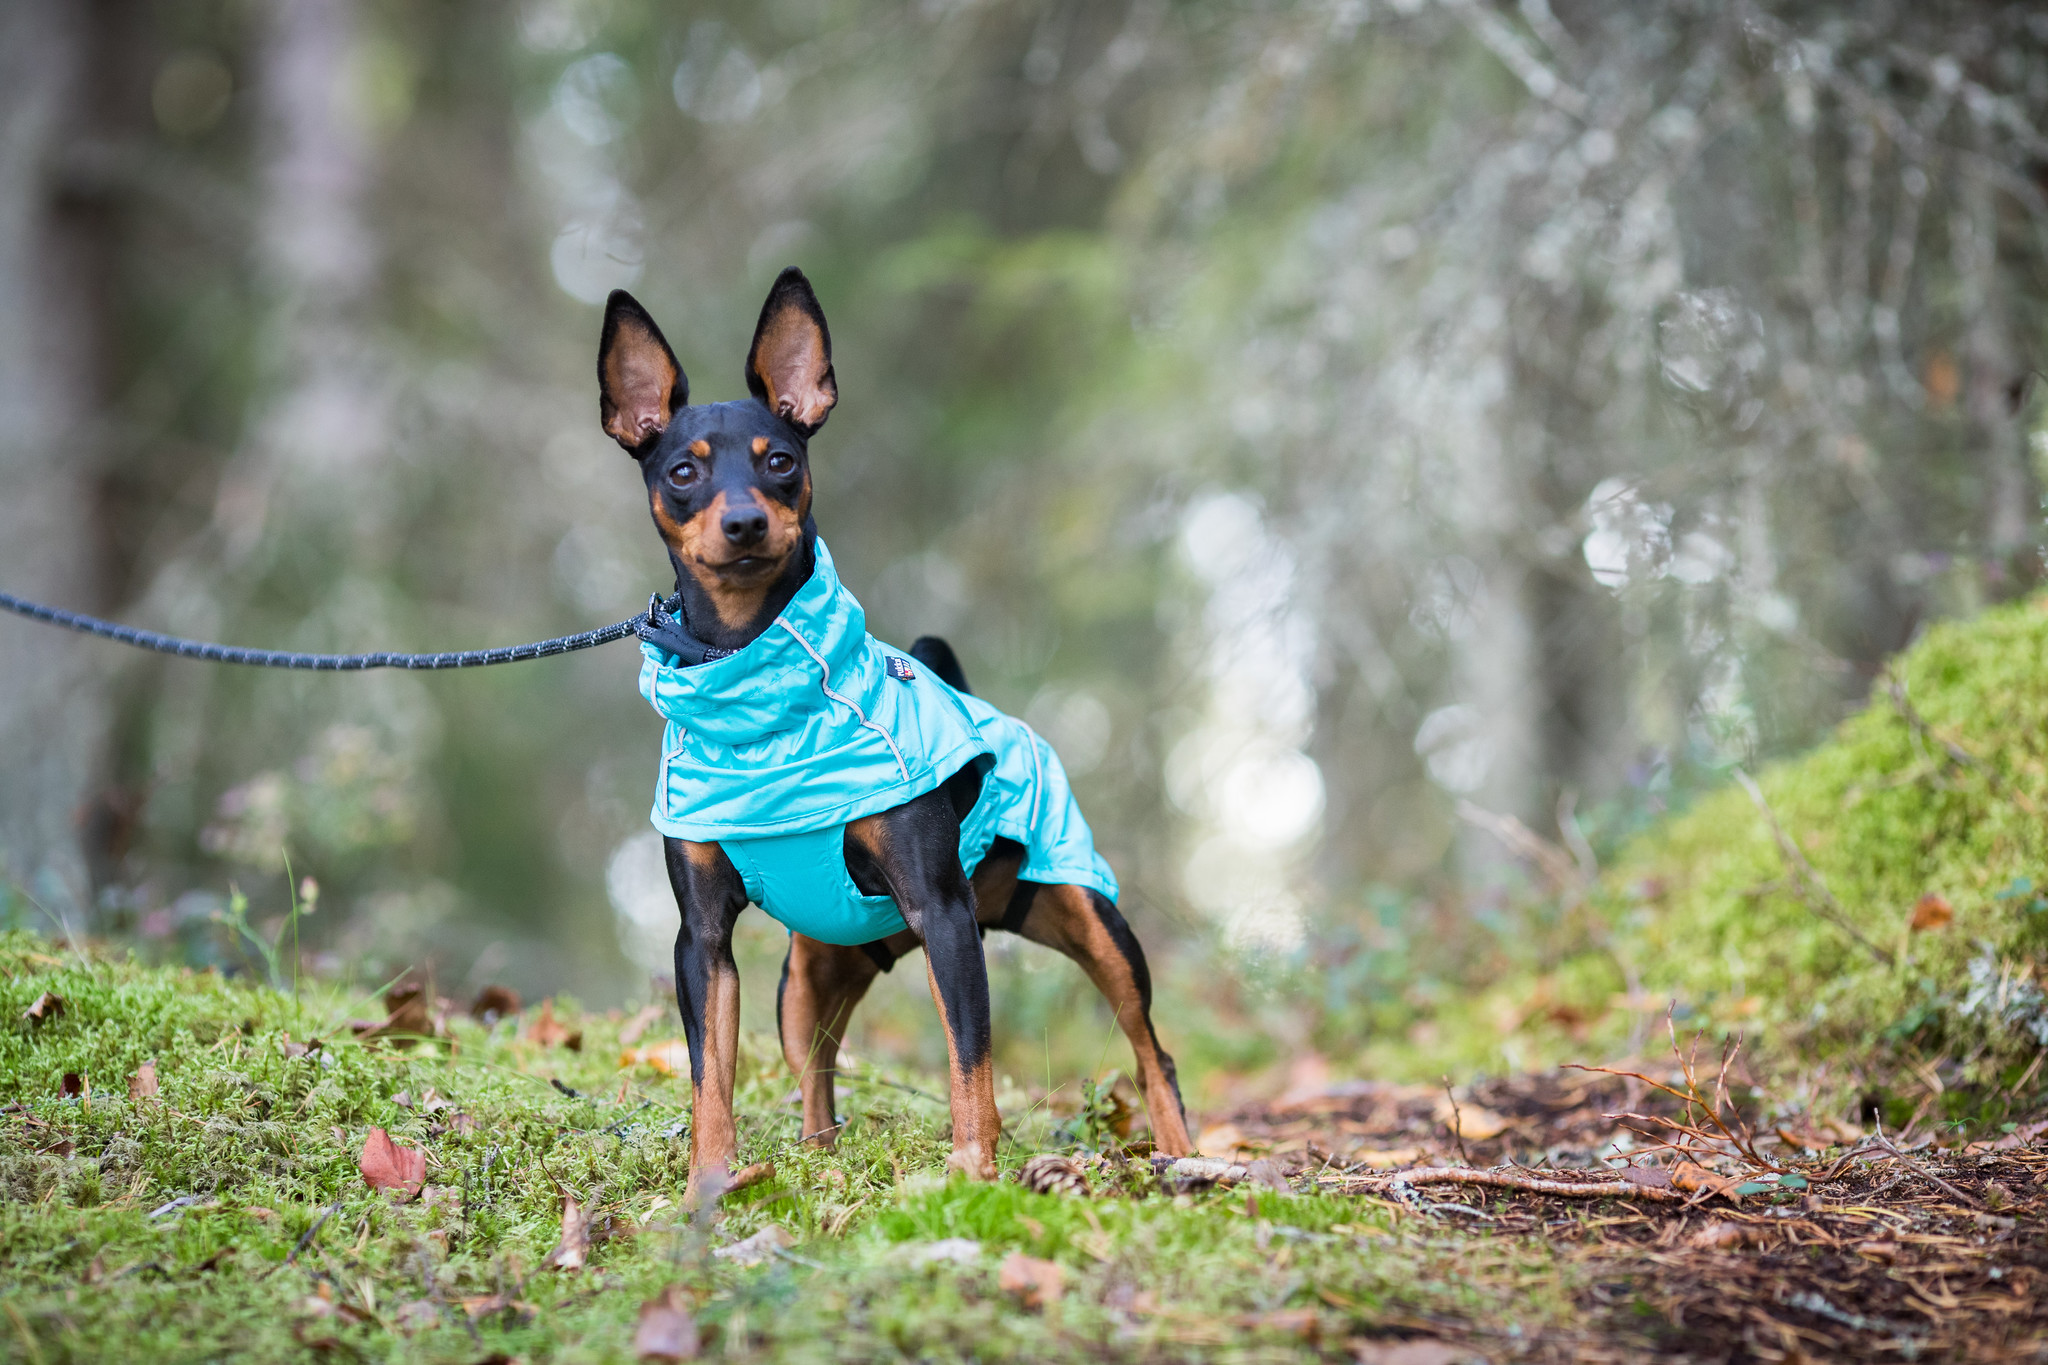 Afbeelding RukkaPets Hase raincoat turquoise – Jas Hond